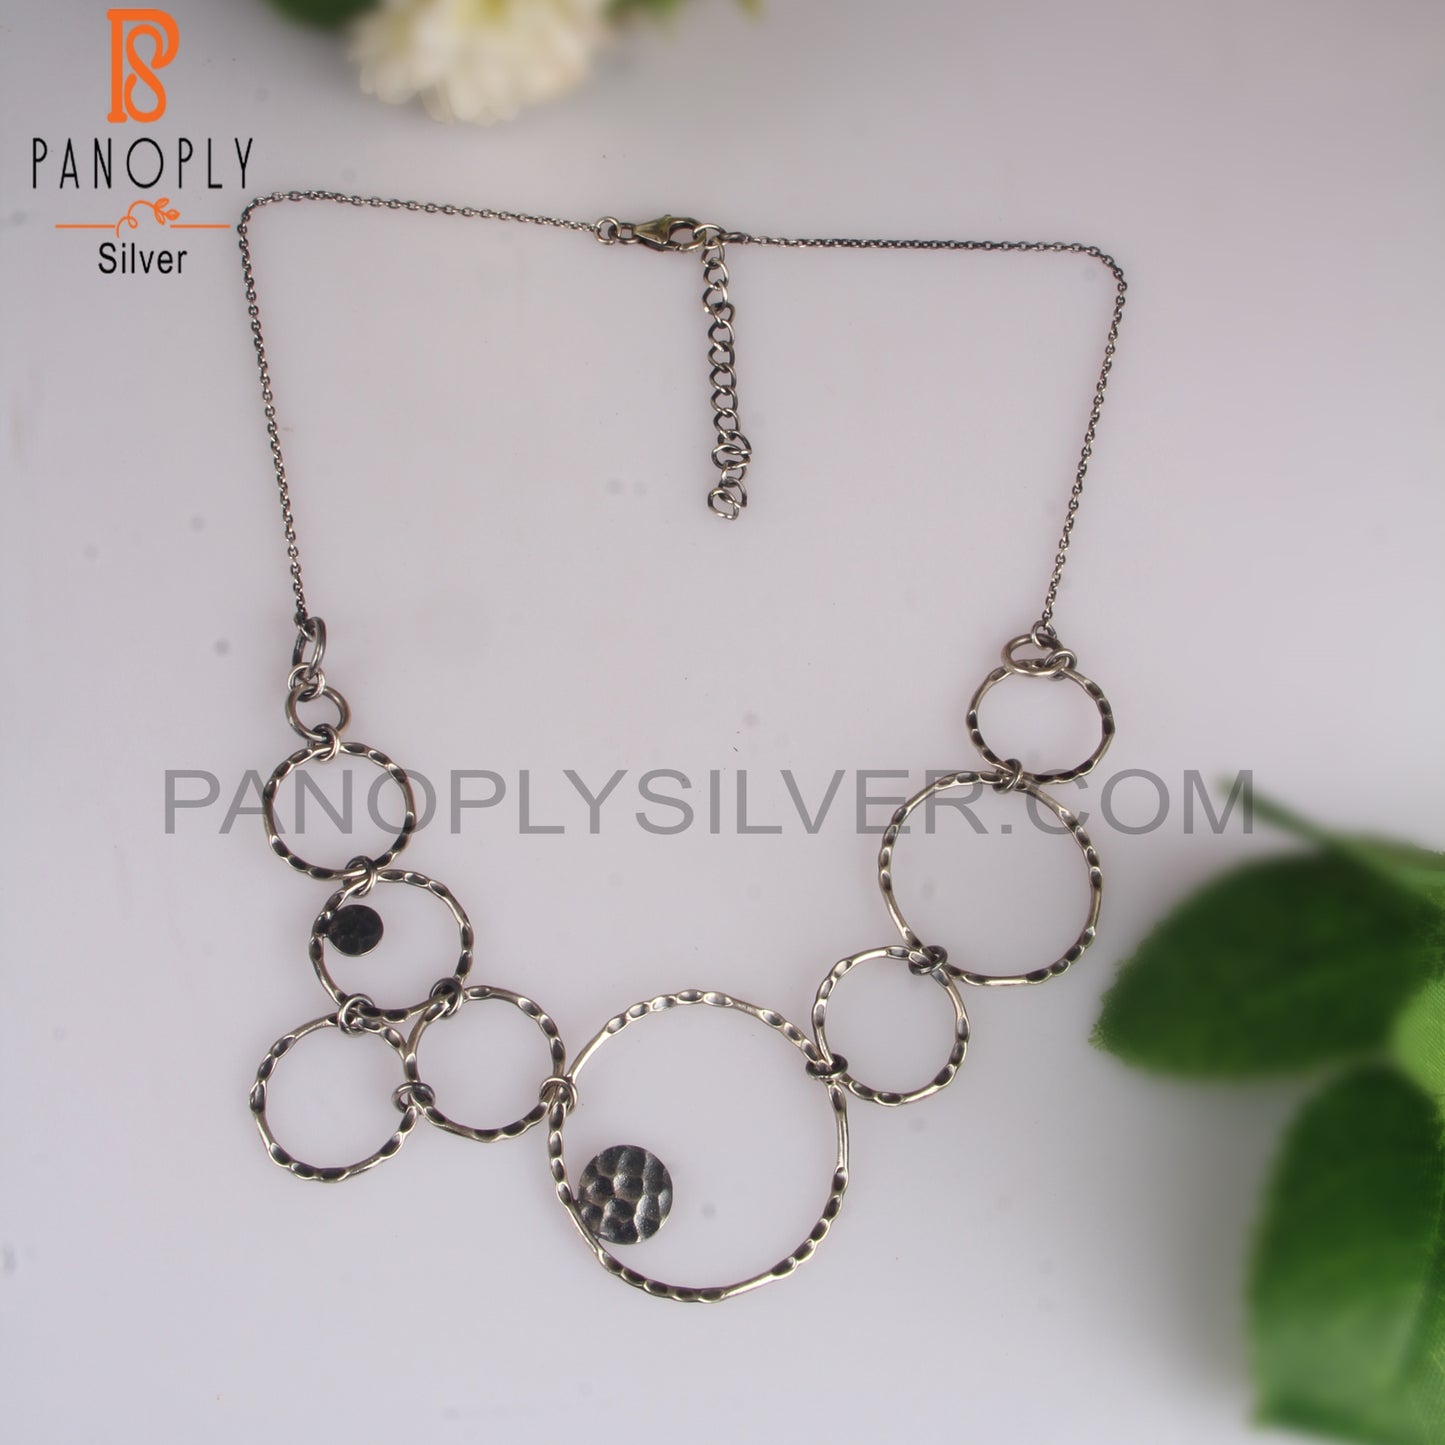 Handmade 925 Sterling Silver Circular Necklace